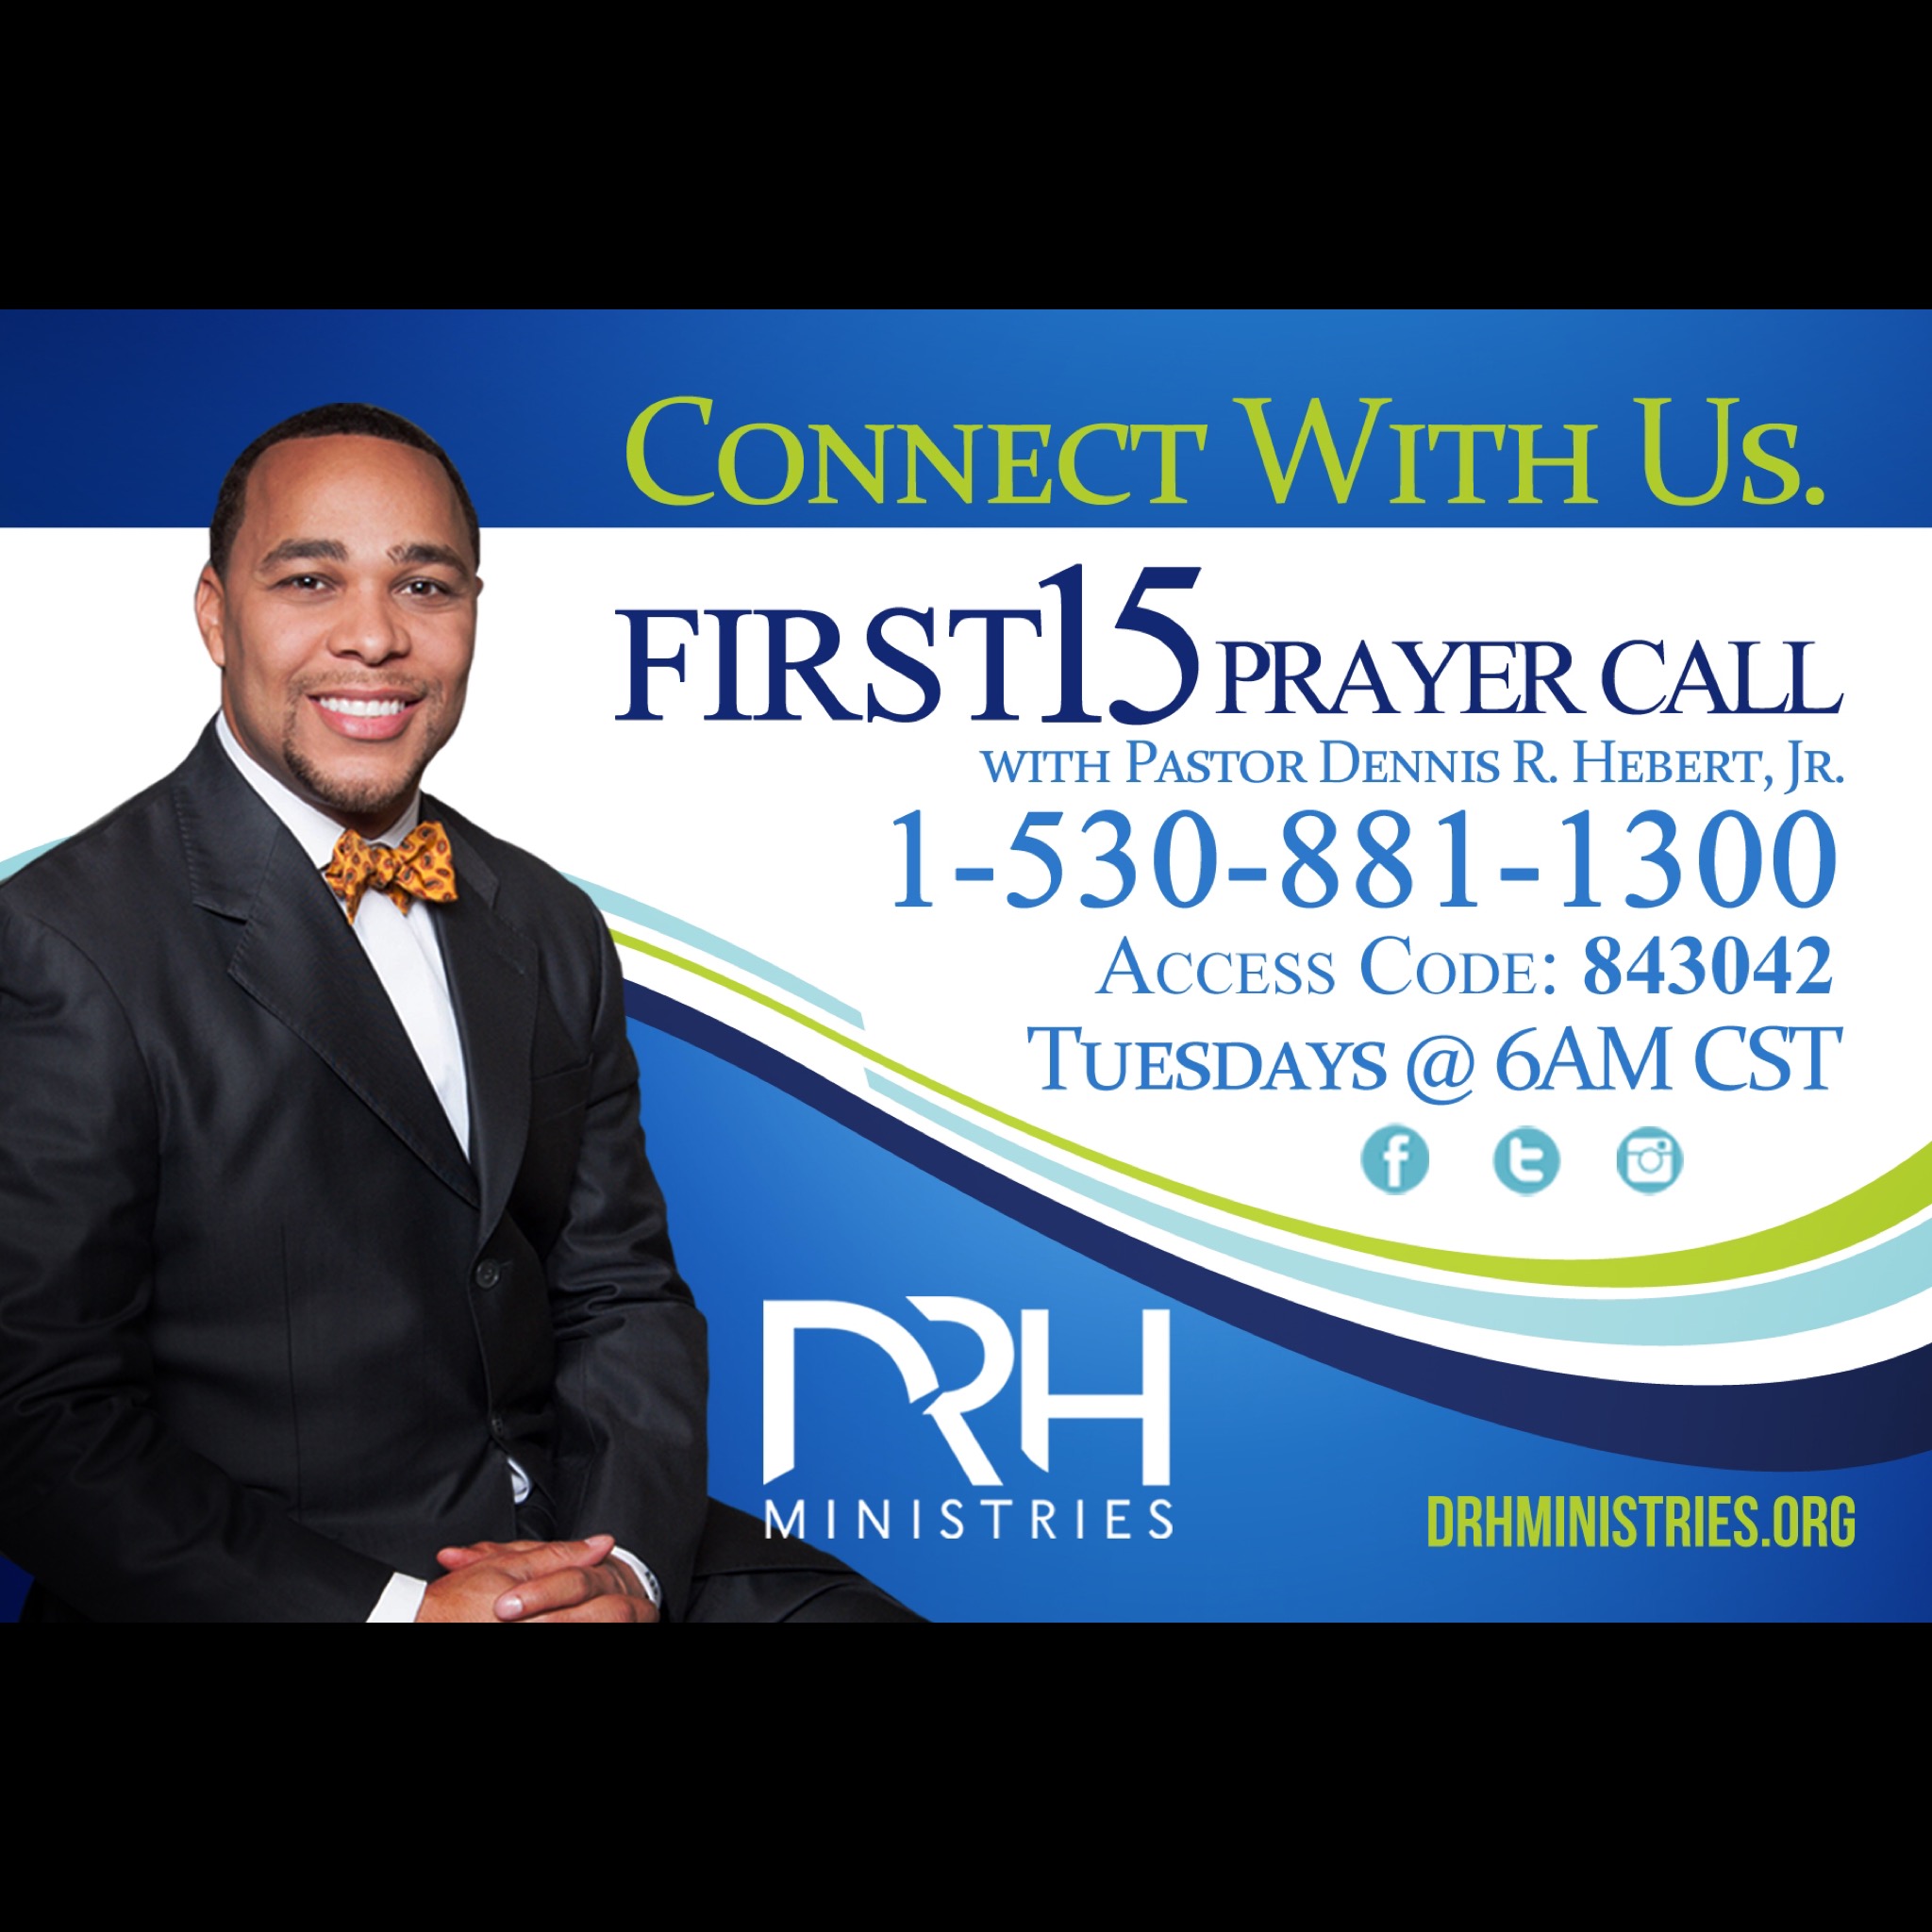 First 15 Prayer Call: Pray for Christian Leaders